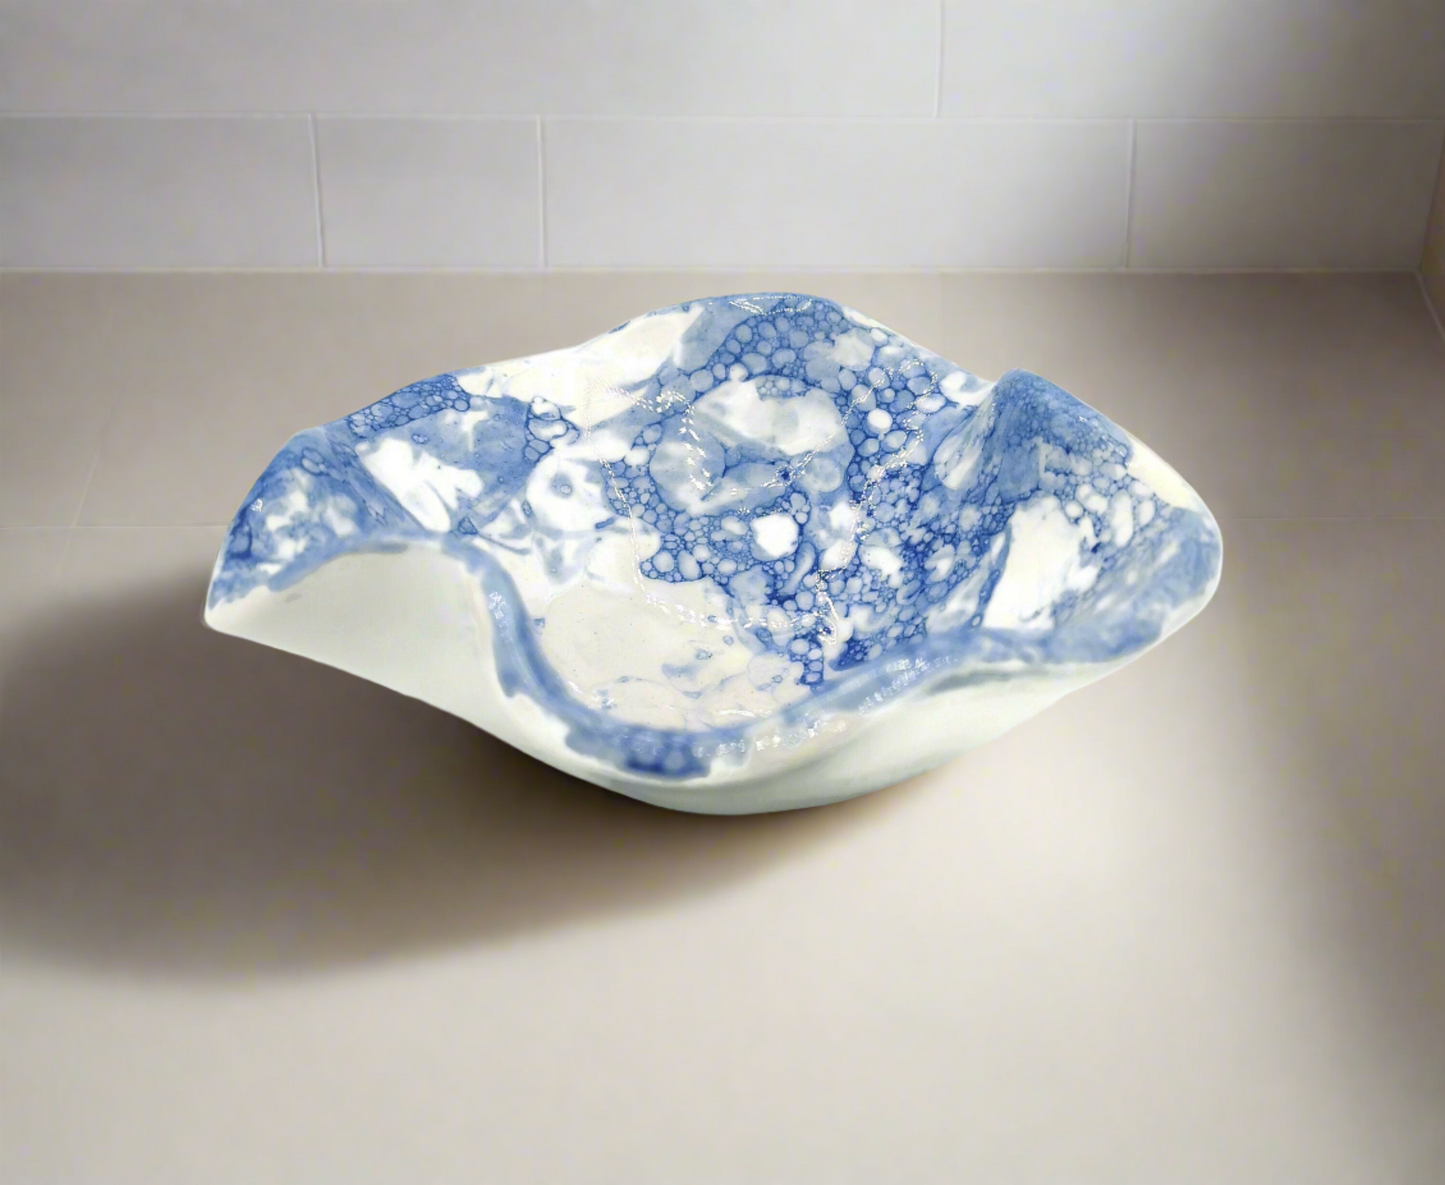 Unique Irregular Shape Handmade Ceramic Trinket Dish - White and Blue Small Clay Soap Bowl for Soap Bars